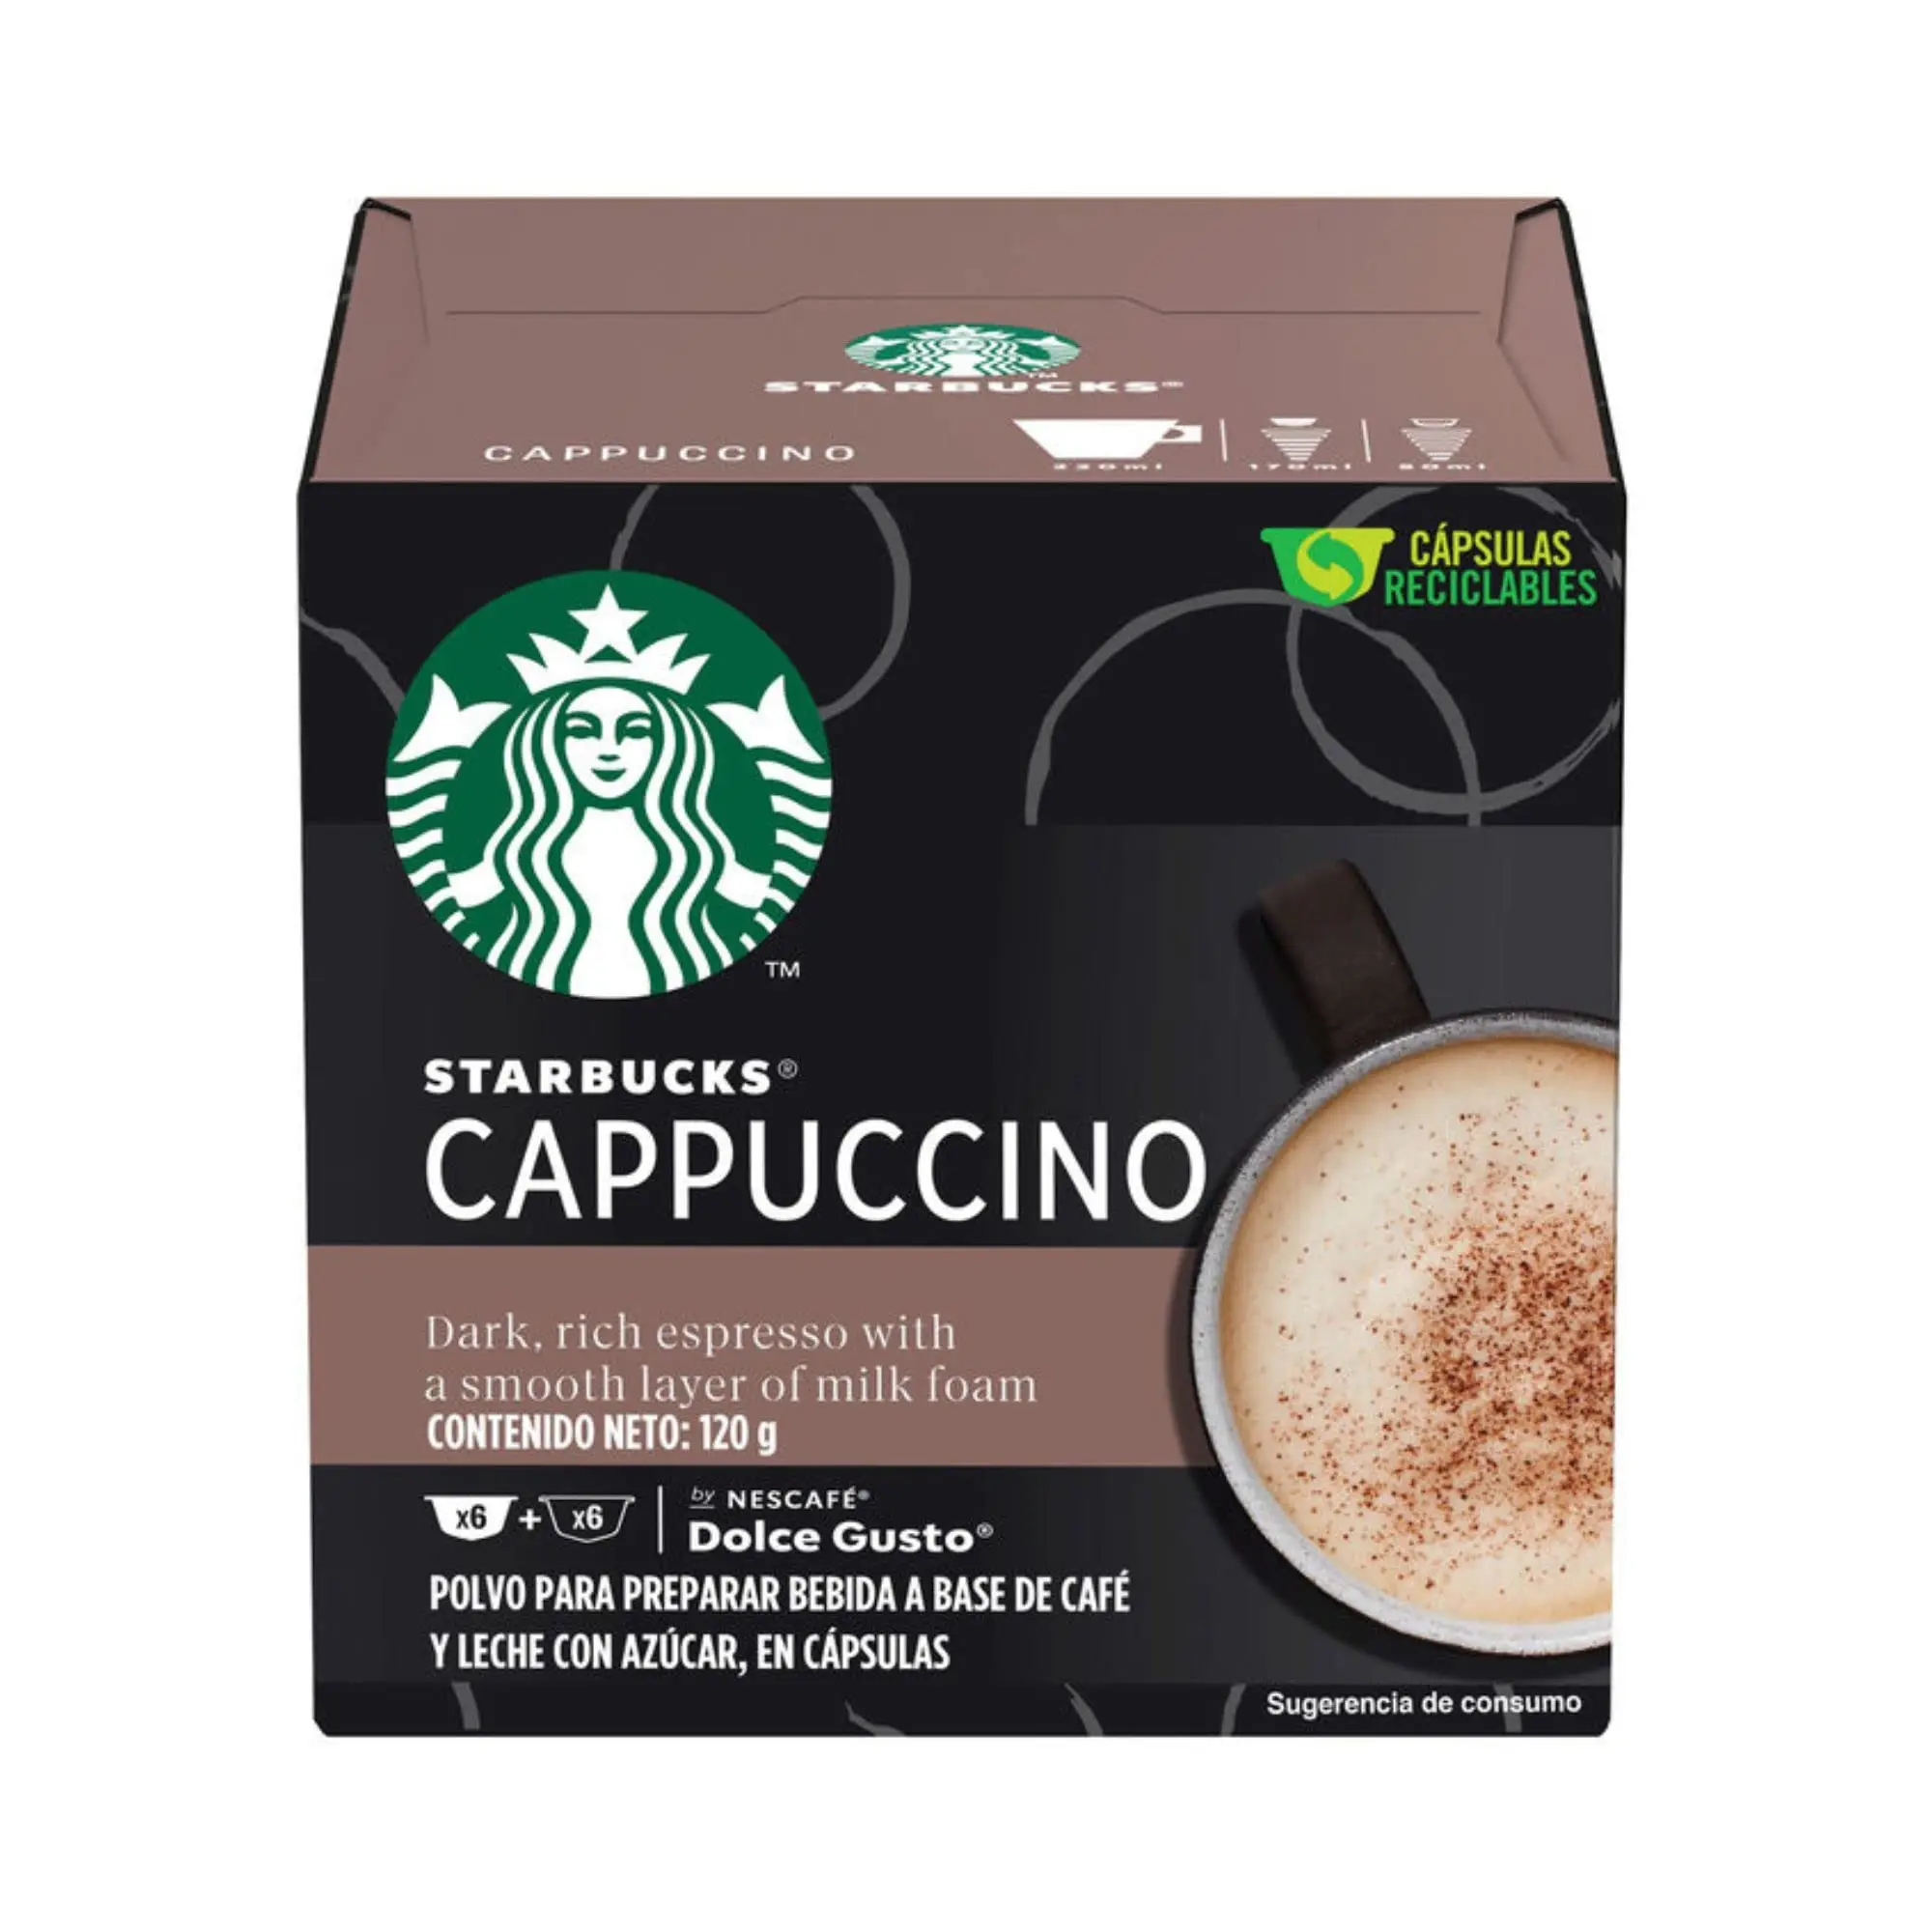 cafe cappuccino starbucks - Que tiene el capuchino Starbucks